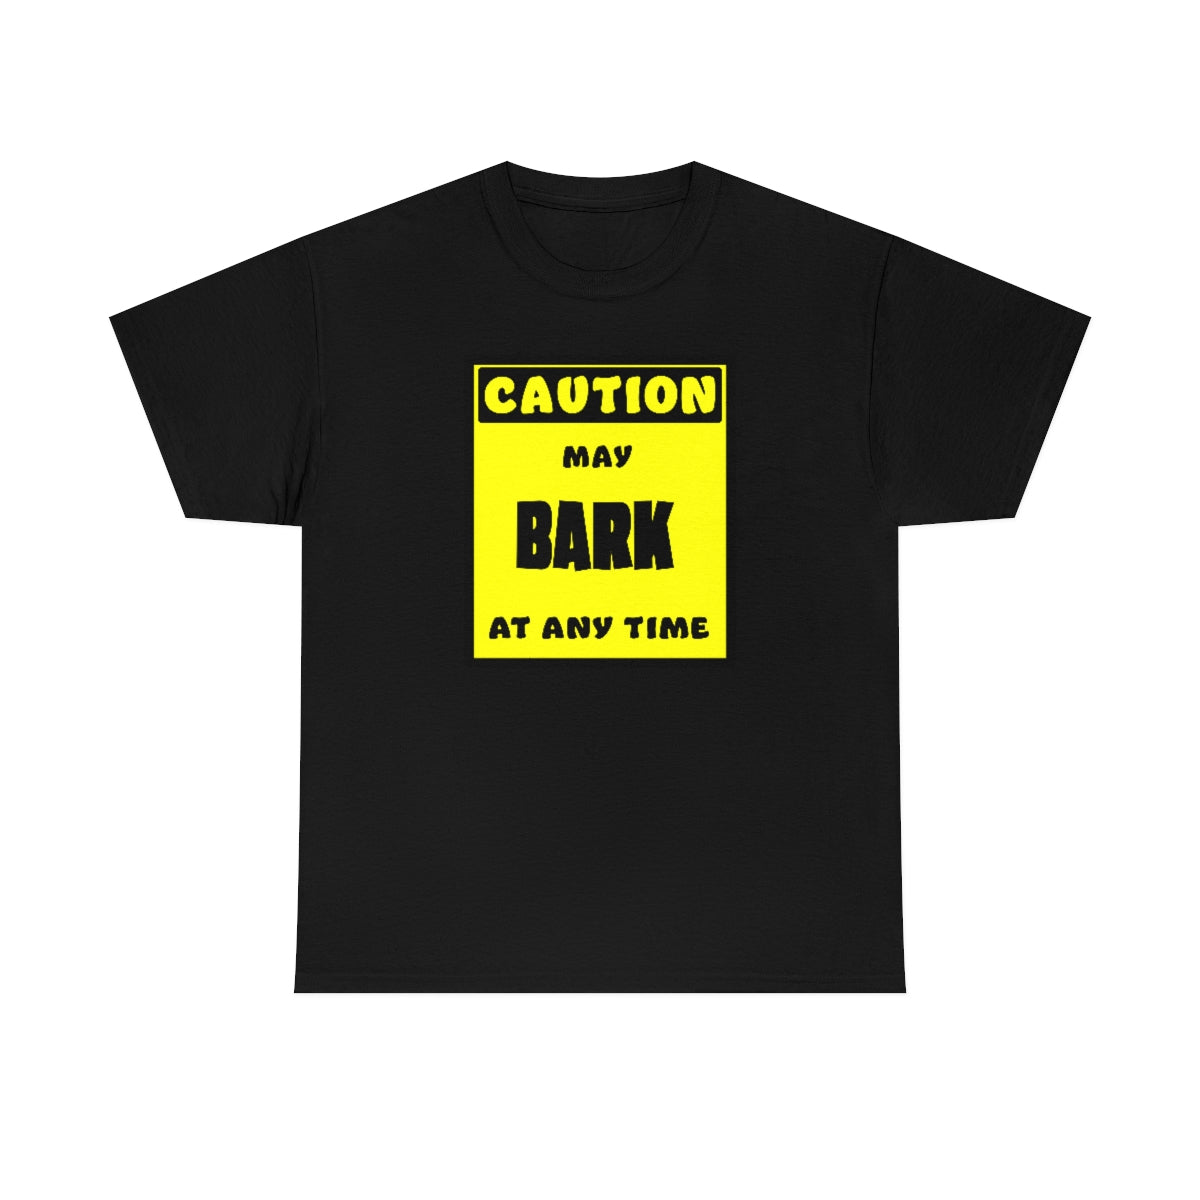 CAUTION! May BARK at any time! - T-Shirt T-Shirt AFLT-Whootorca Black S 